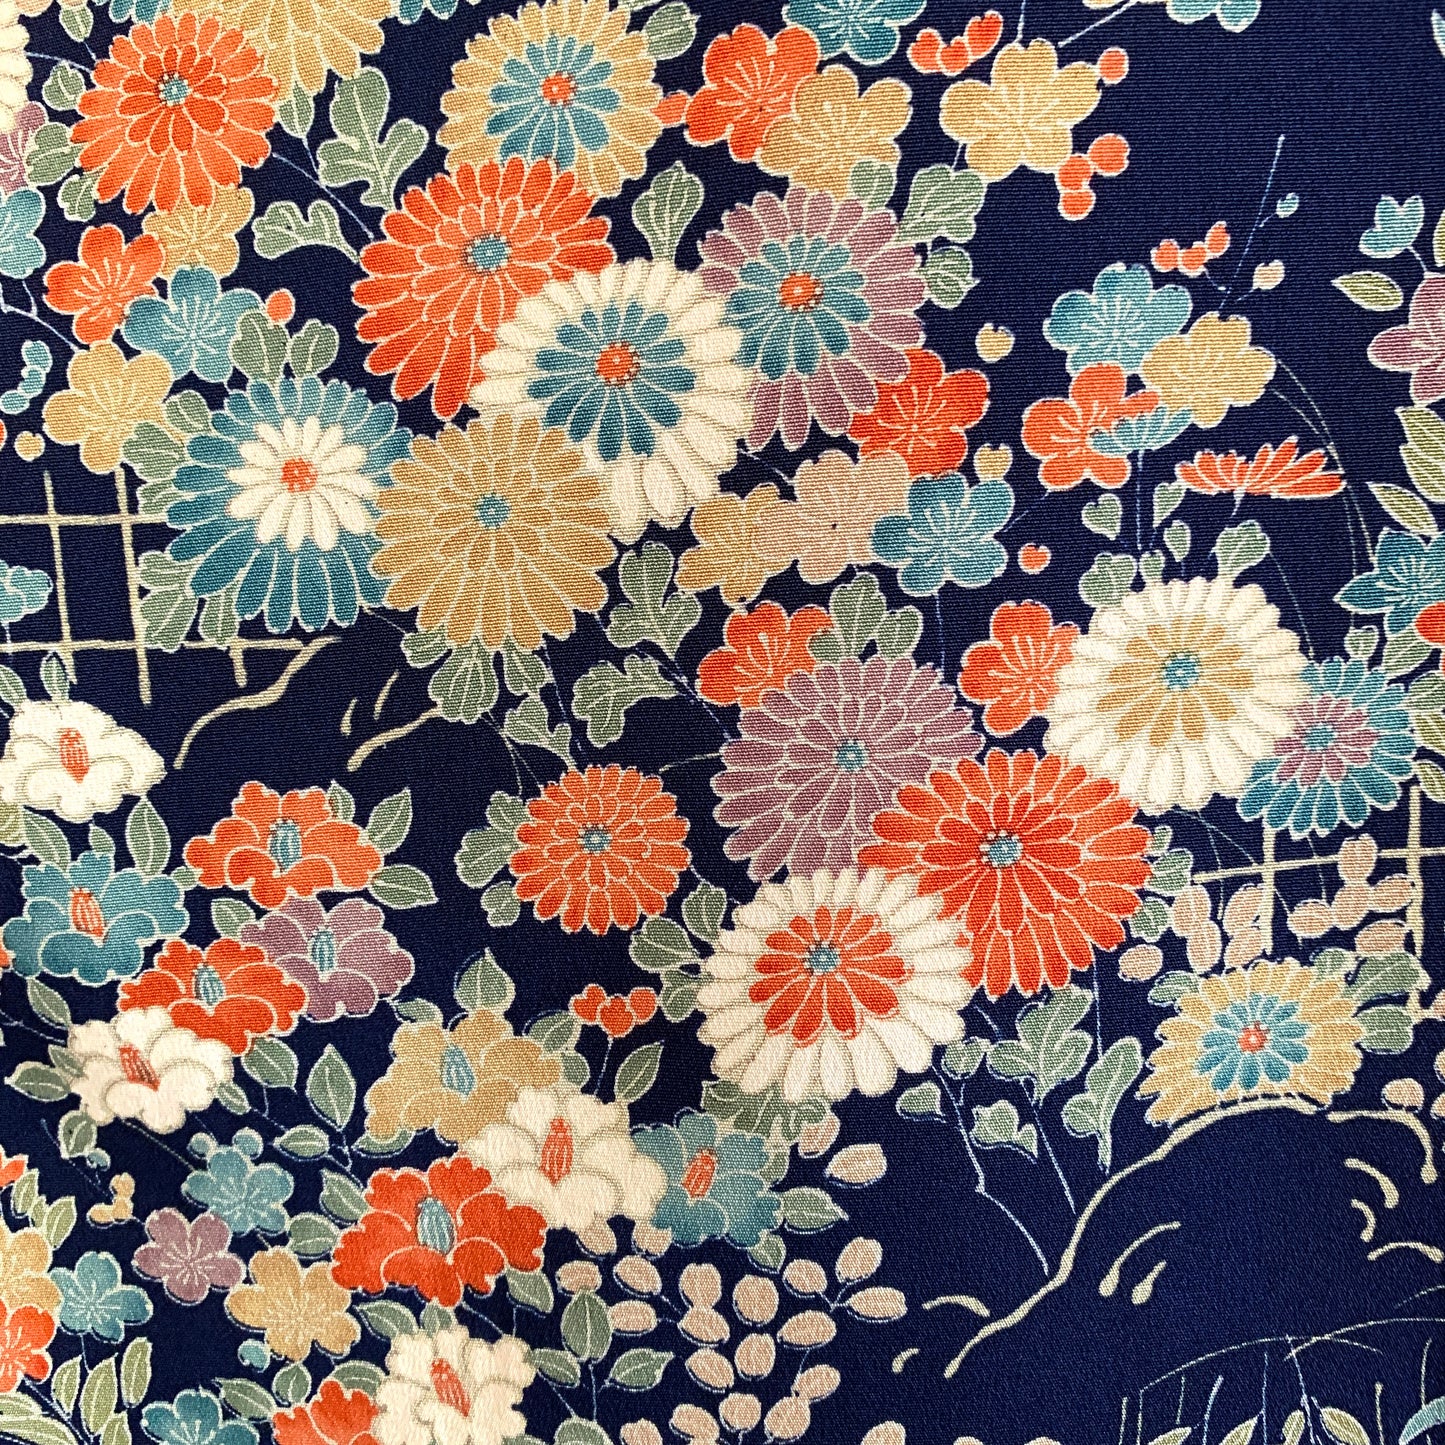 Kimono dress, komon 小紋, Handcrafted, Upcycled, #pre16